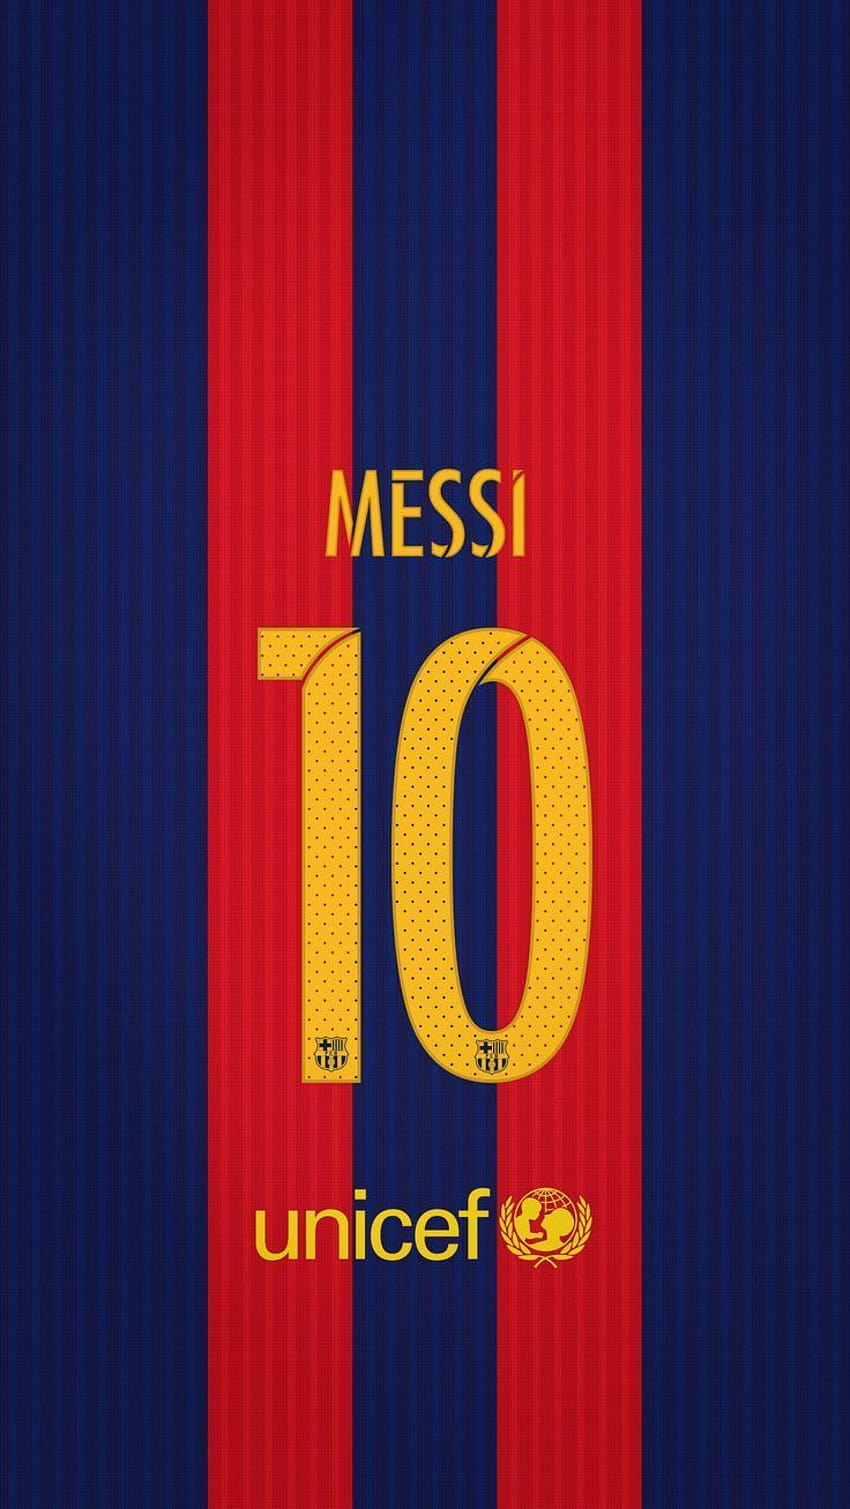 Jersey Lionel Messi, kaos messi wallpaper ponsel HD